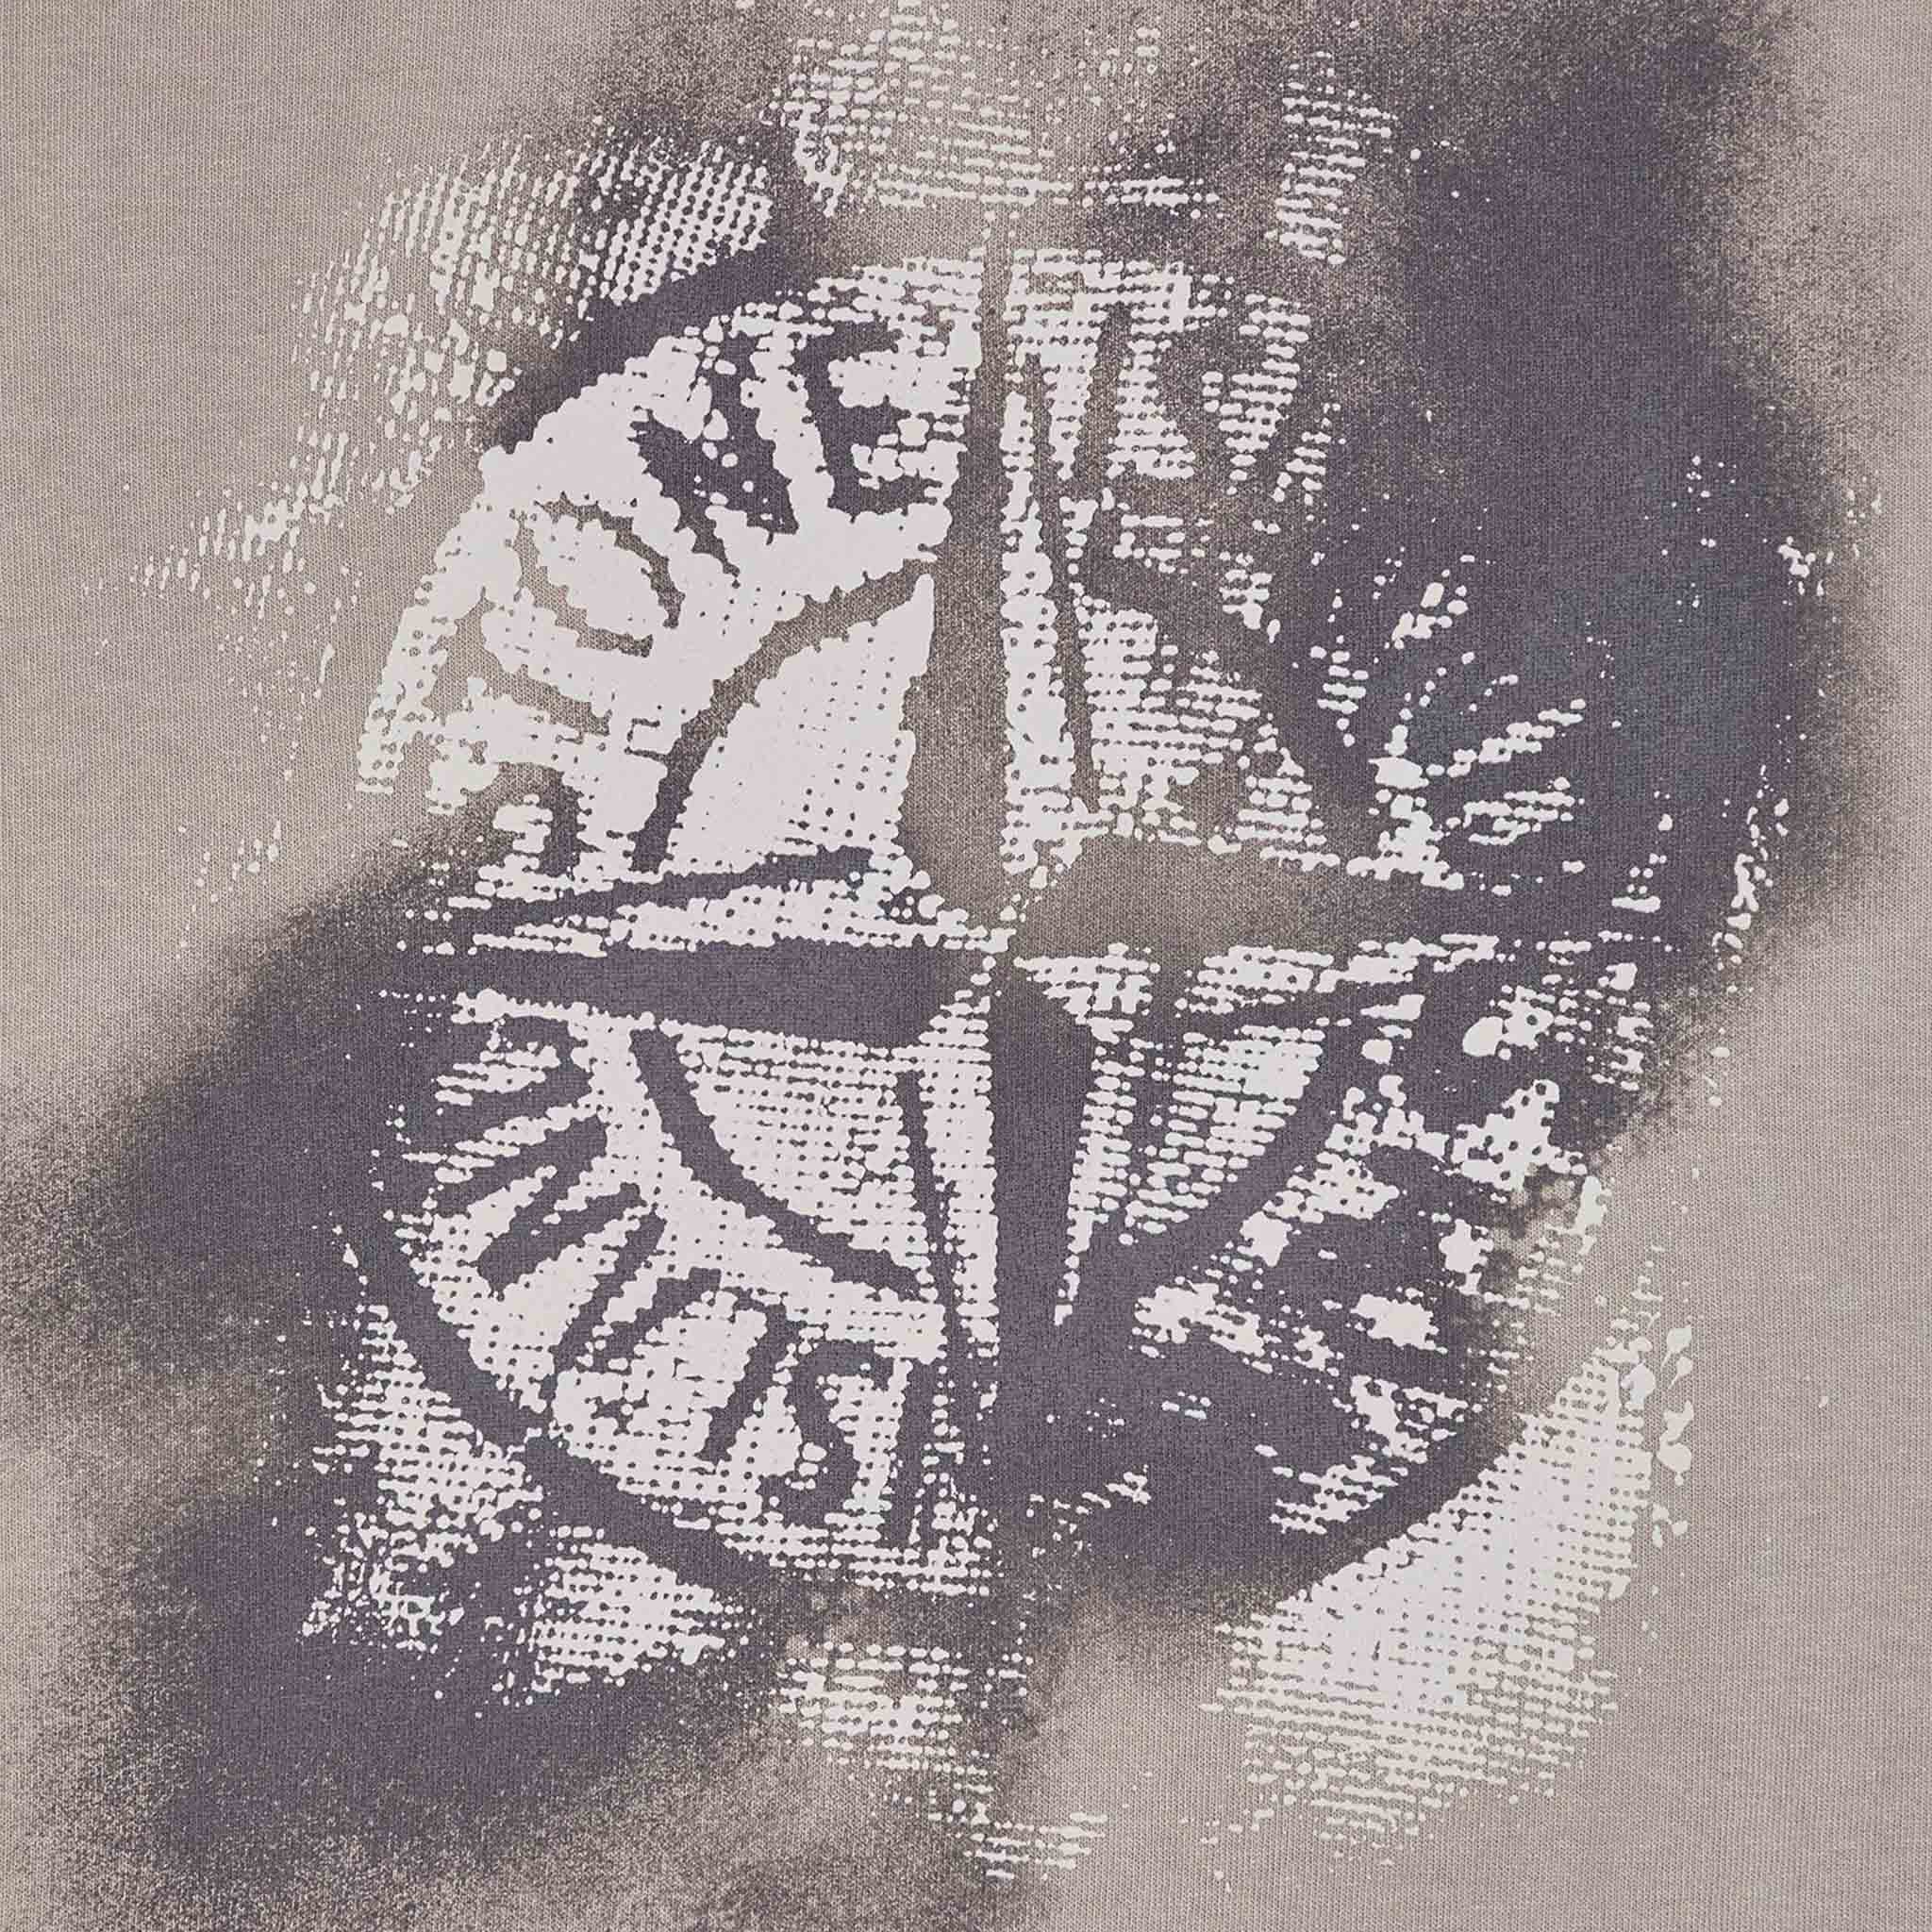 Stone Island "Camo One" Print T-Shirt in Dove Grey